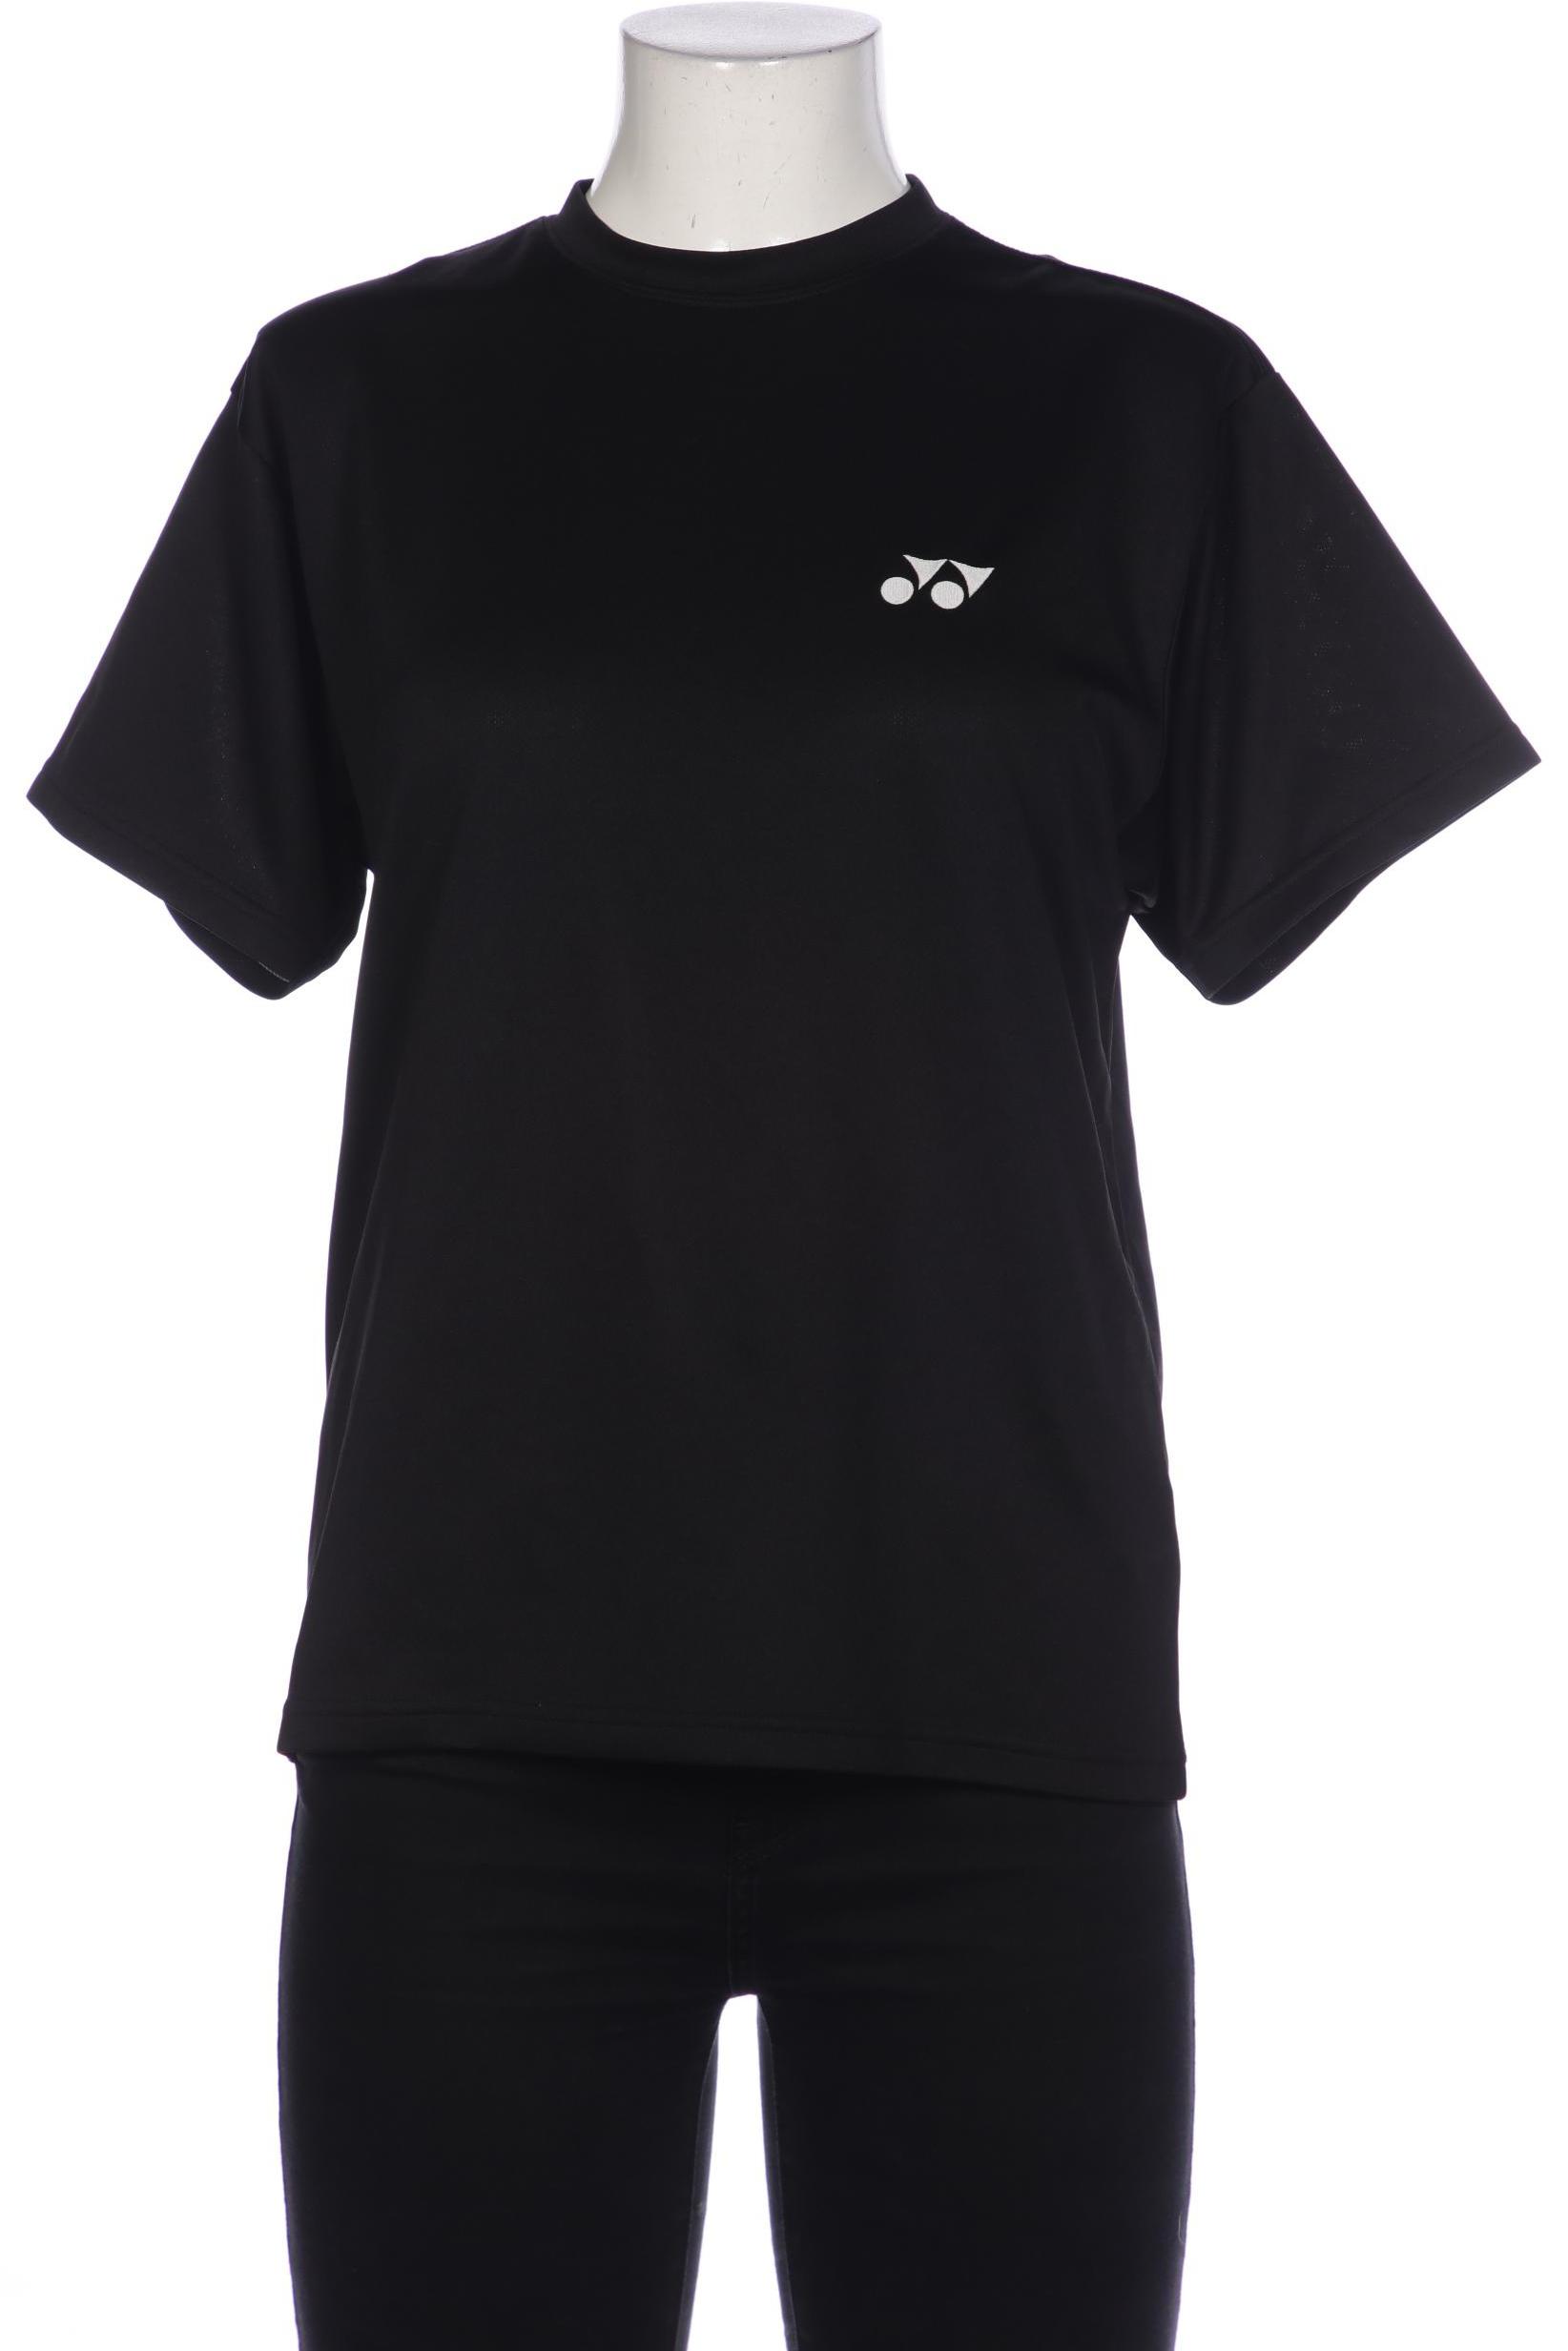 YONEX Damen T-Shirt, schwarz von Yonex